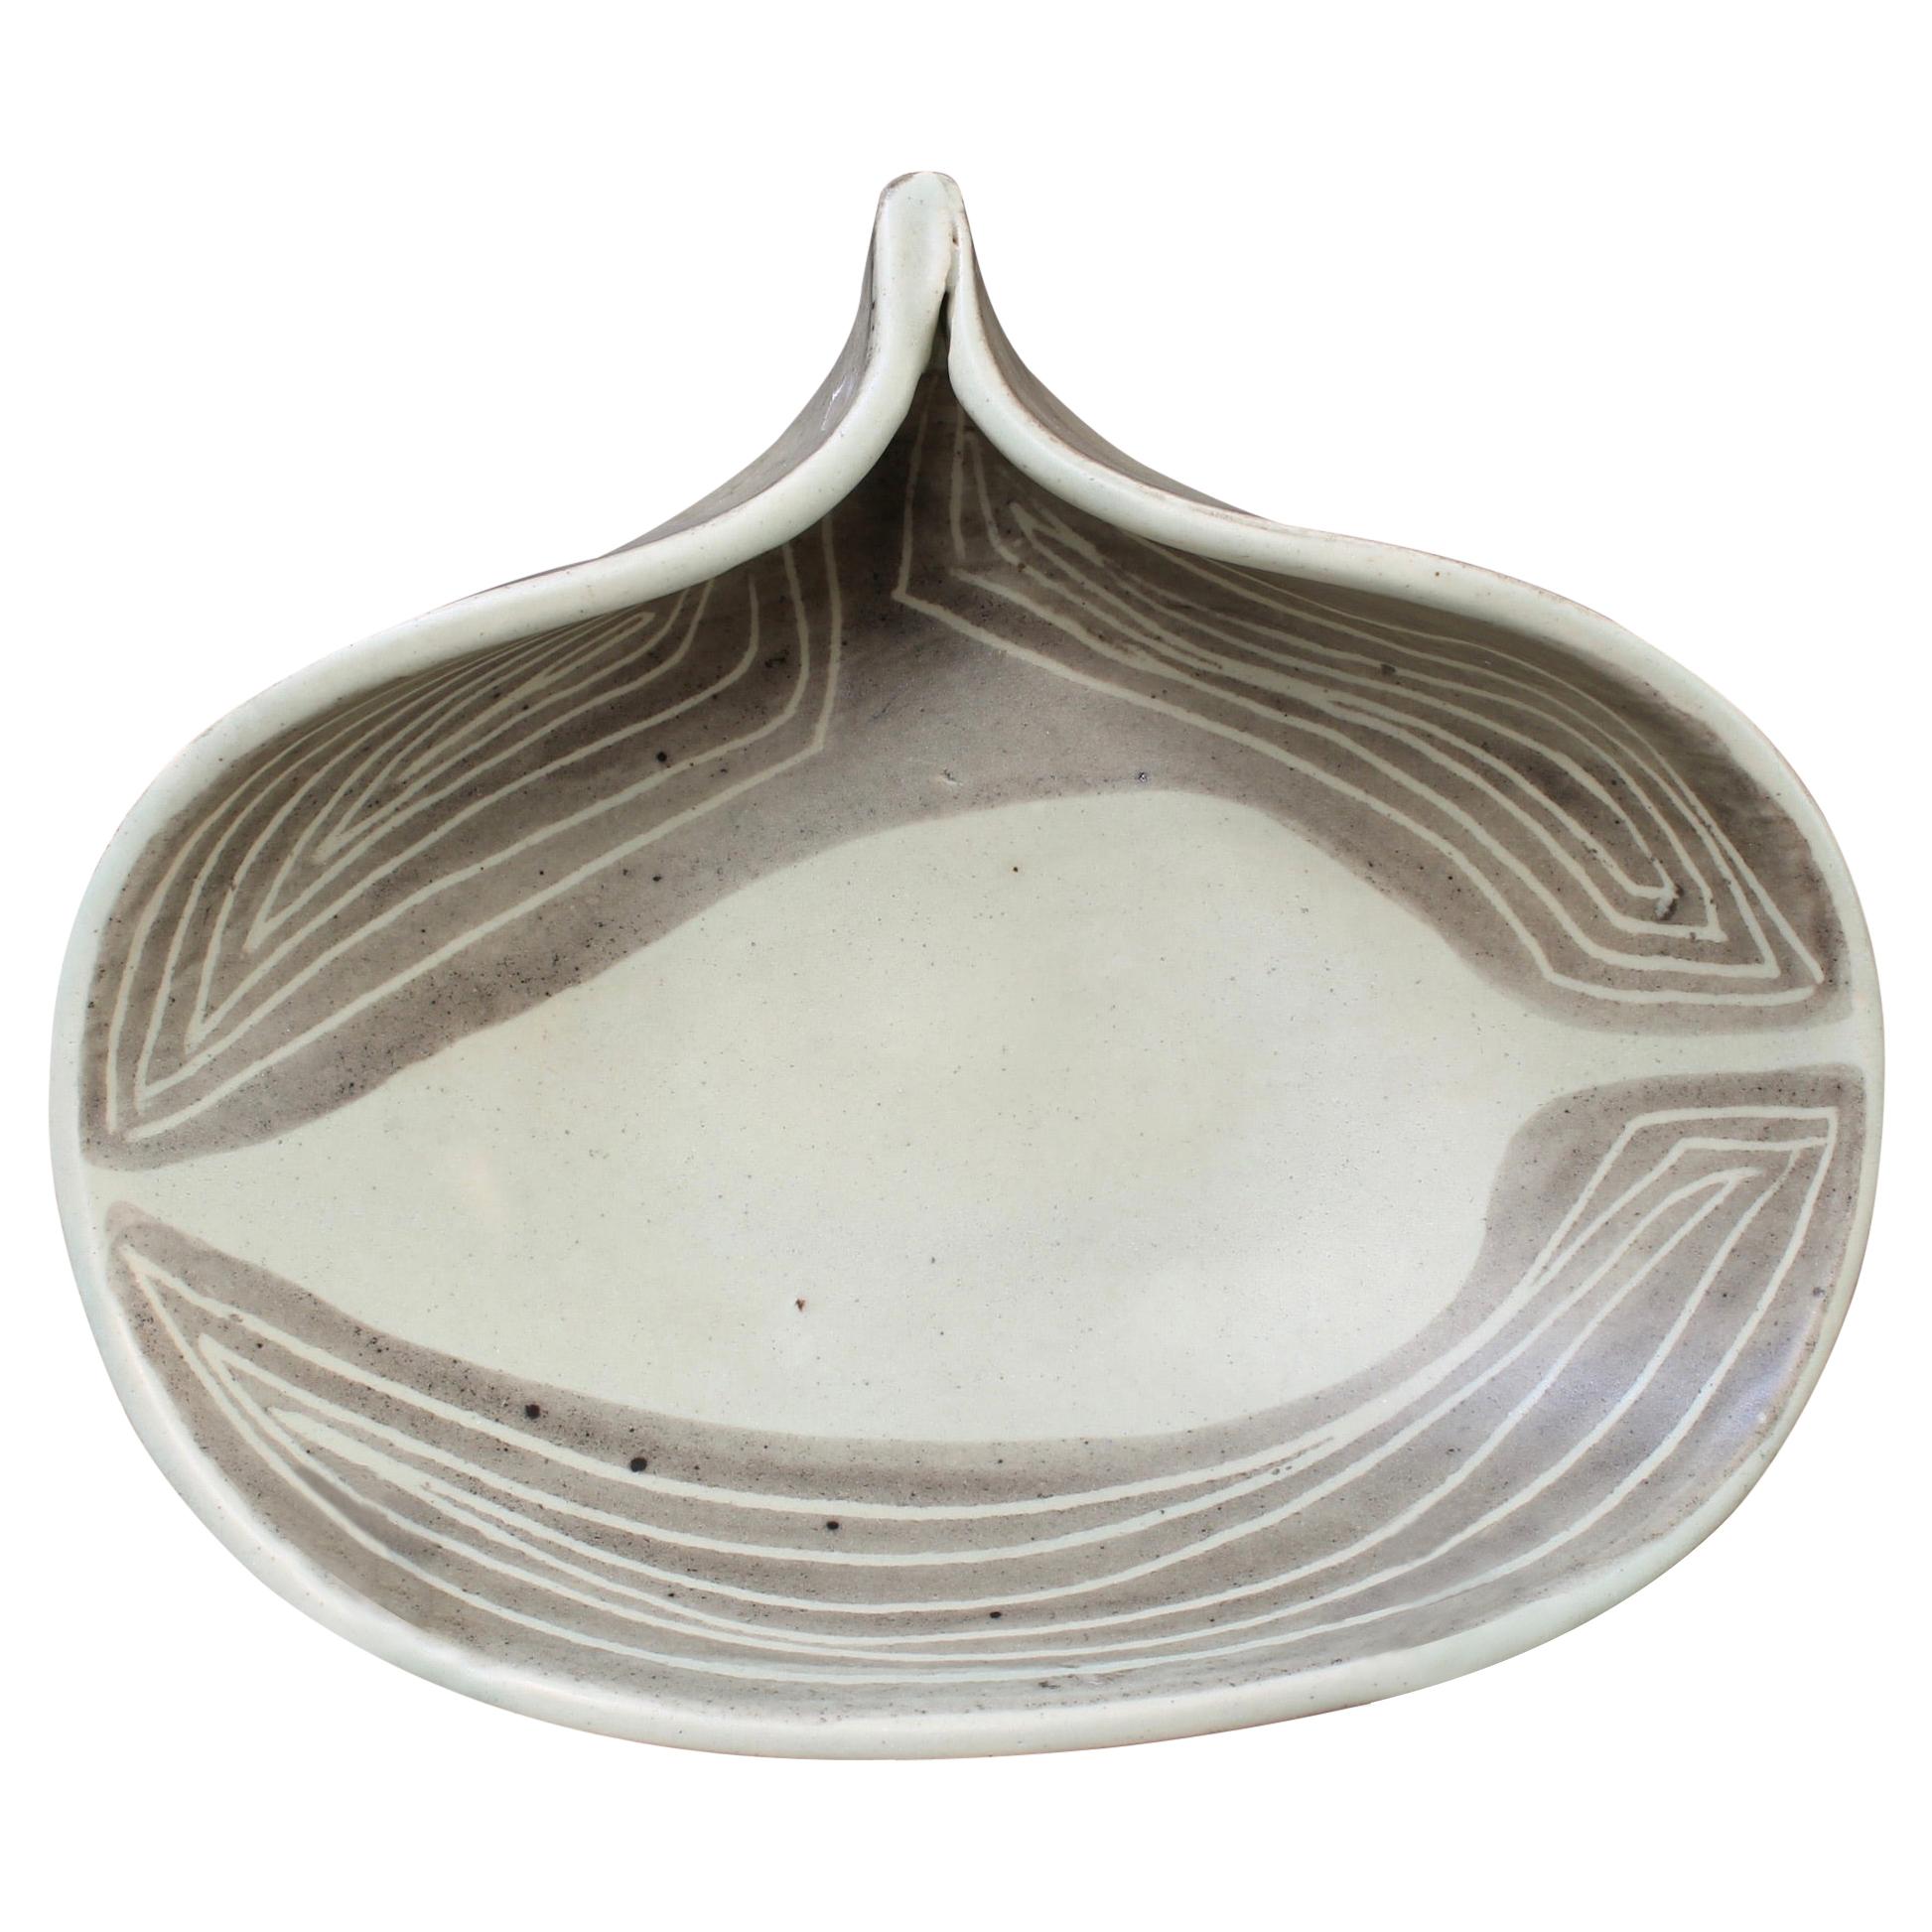 Vintage Ceramic Bowl with Pinch-Grip by Mado Jolain 'circa 1960s'